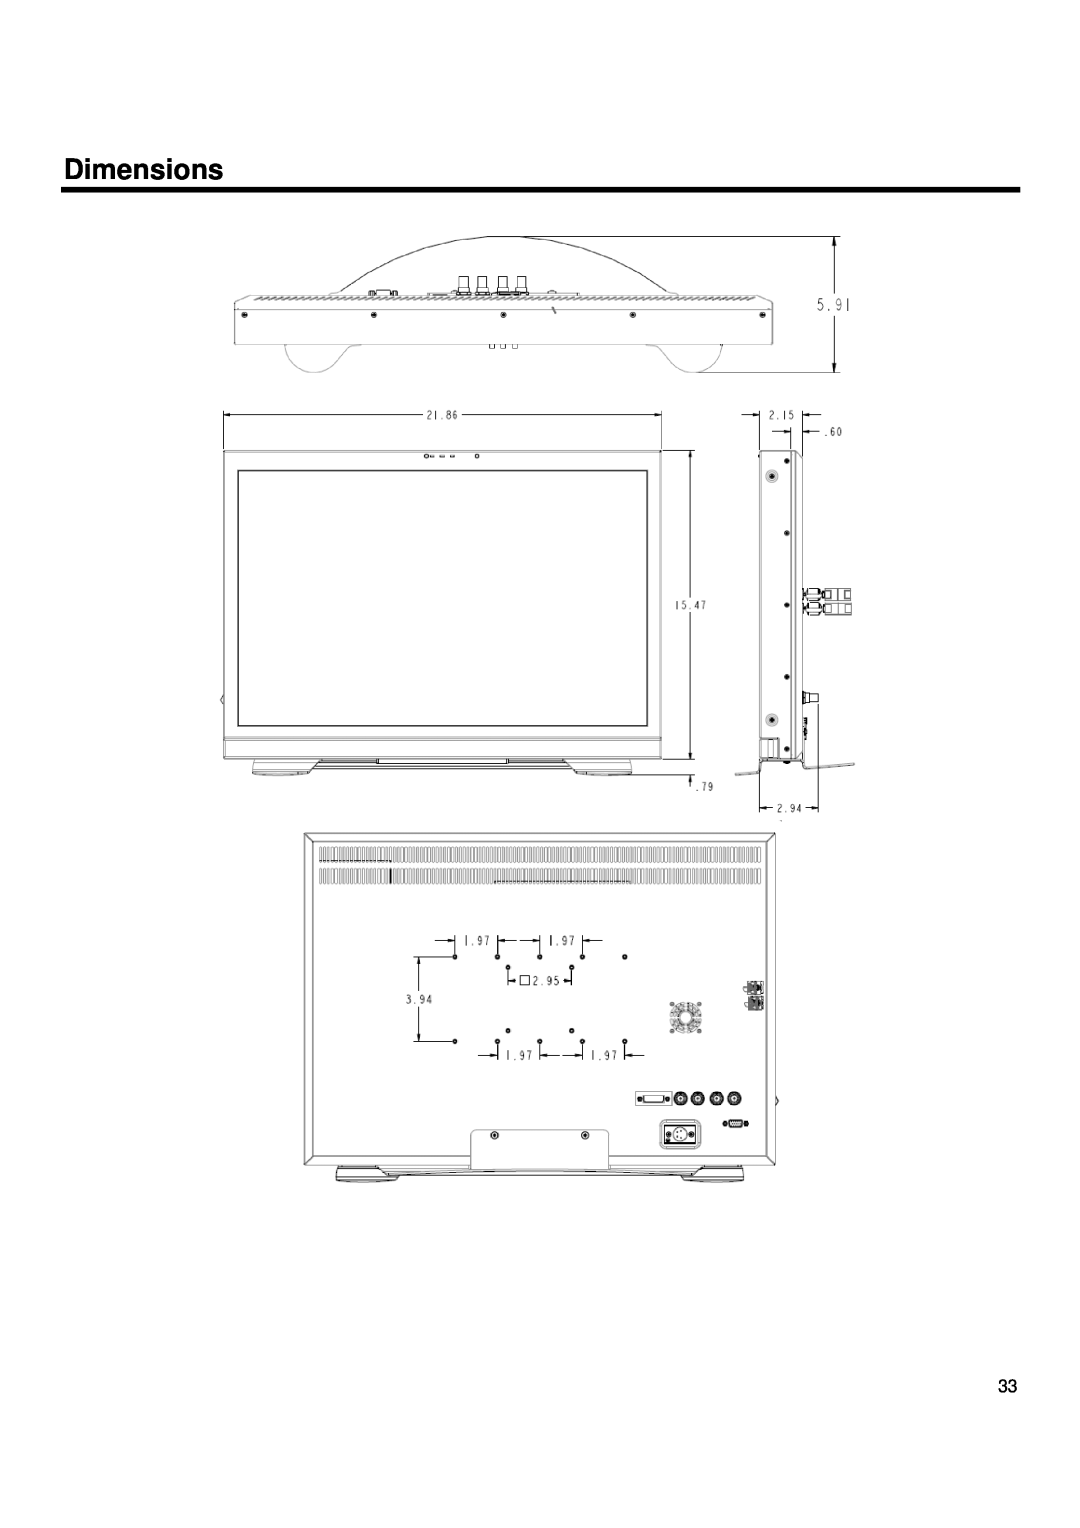 Marshall electronic V-R241-DLW manual Dimensions 